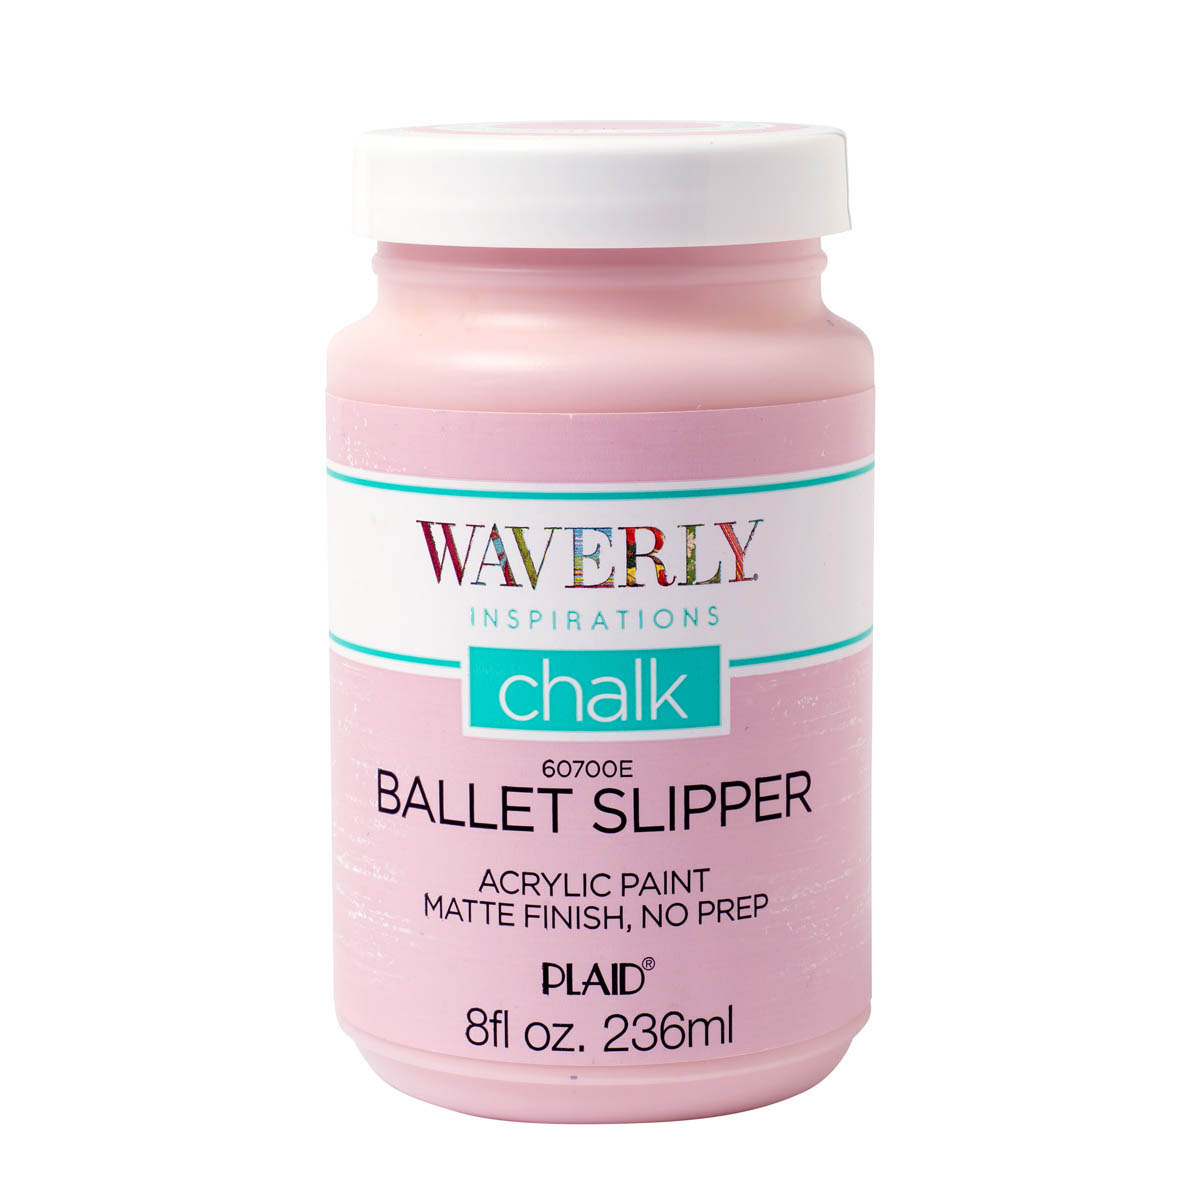 Waverly ® Inspirations Chalk Acrylic Paint - Ballet Slipper, 8 oz. - 60700E